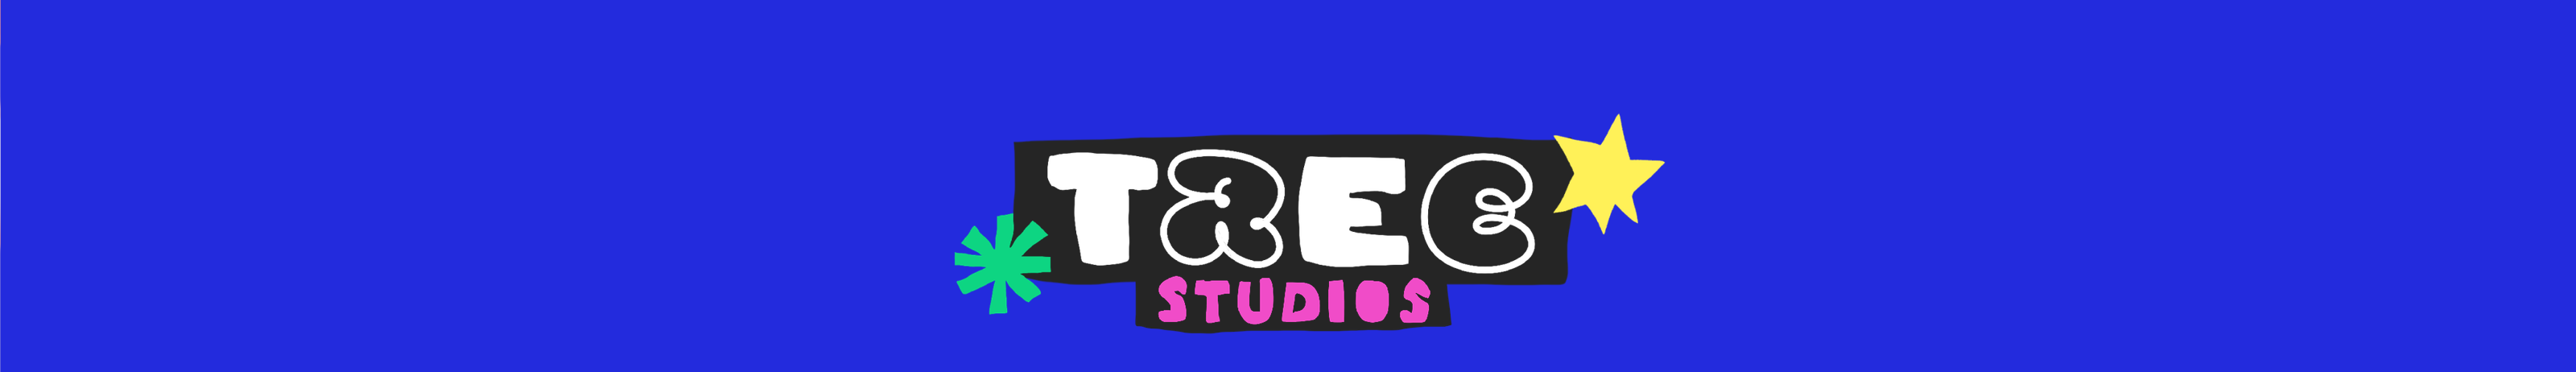 Tree Studios's profile banner